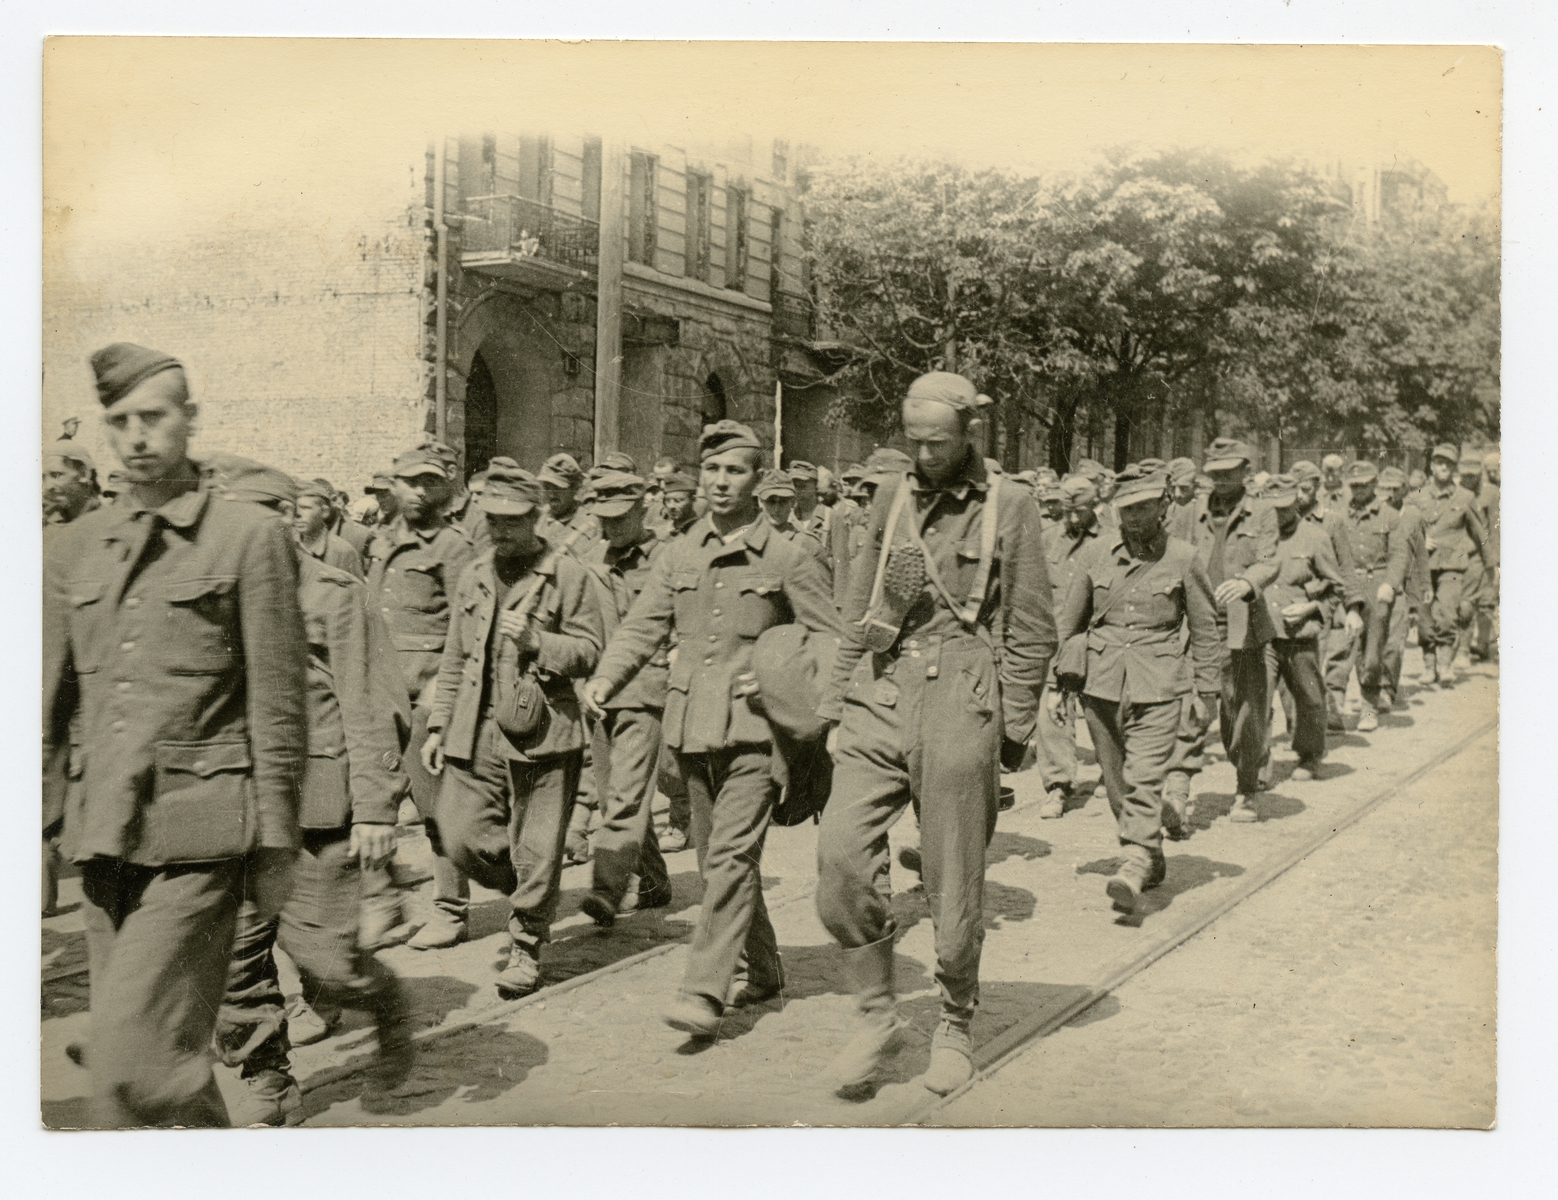 Фото пленных немцев в москве 1944 парад